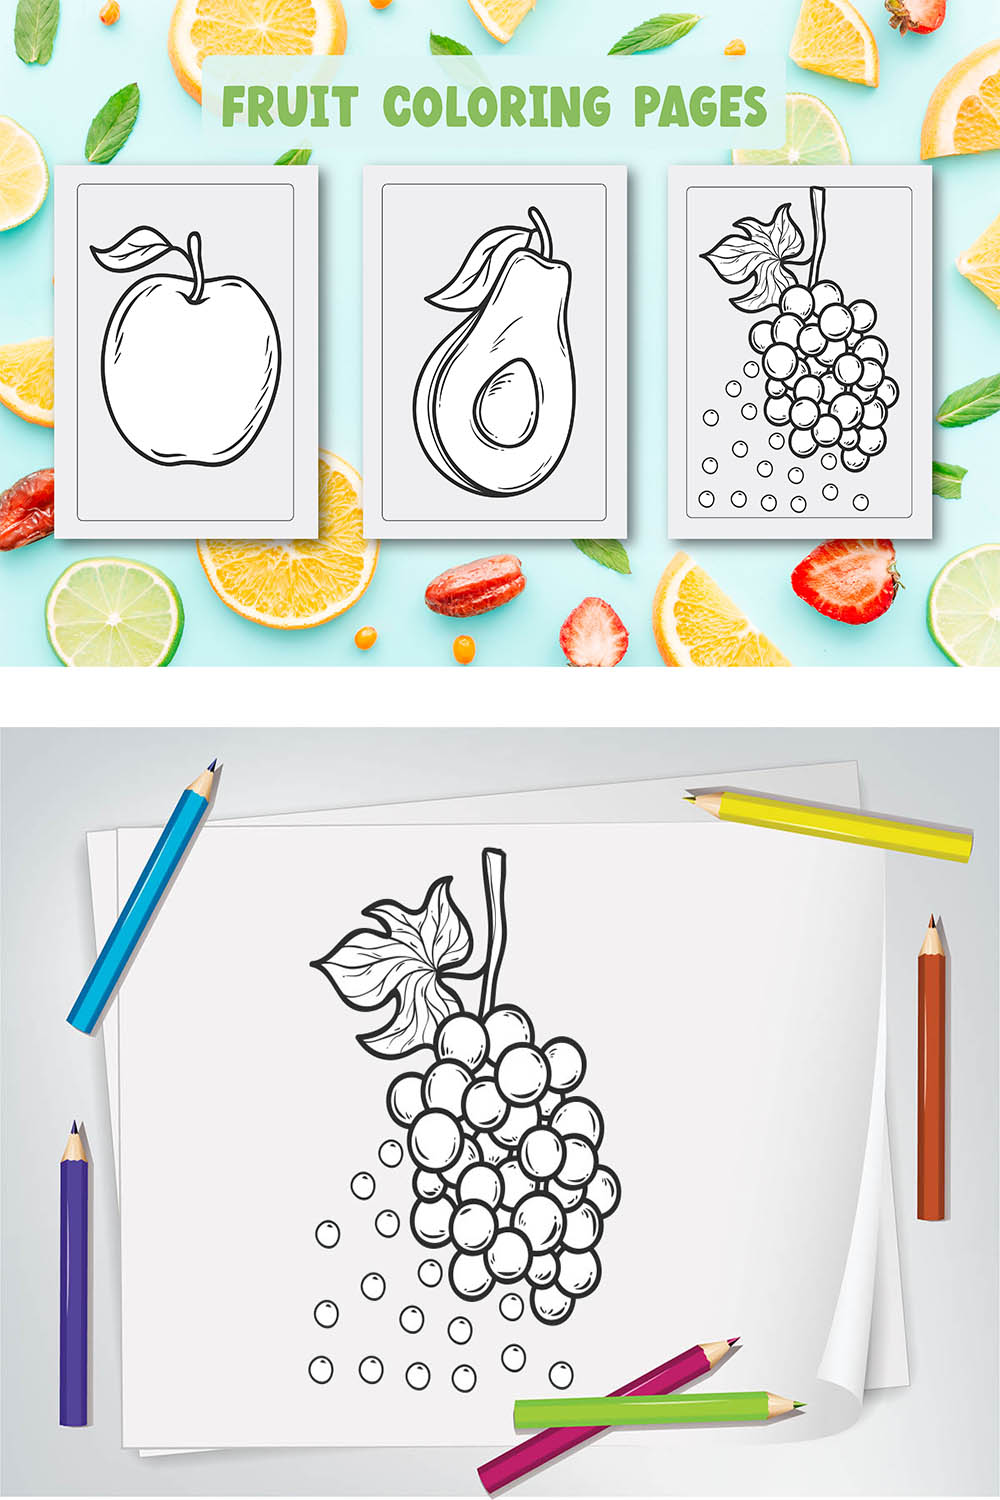 Fruit Coloring Pages KDP Design pinterest image.